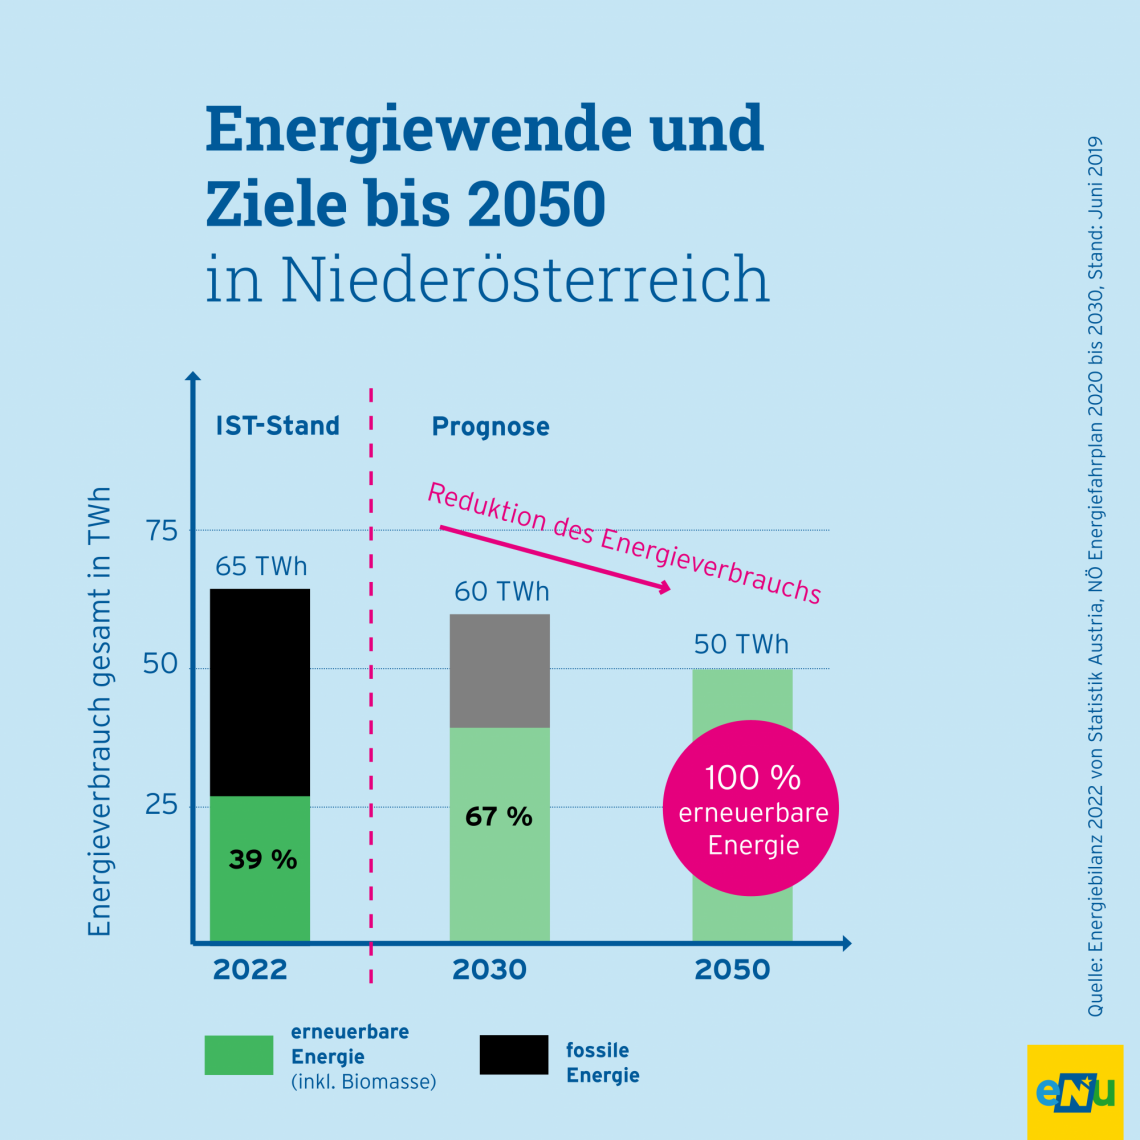 eNu-Grafik: Energiewende Dekarbonisierung in Niederösterreich